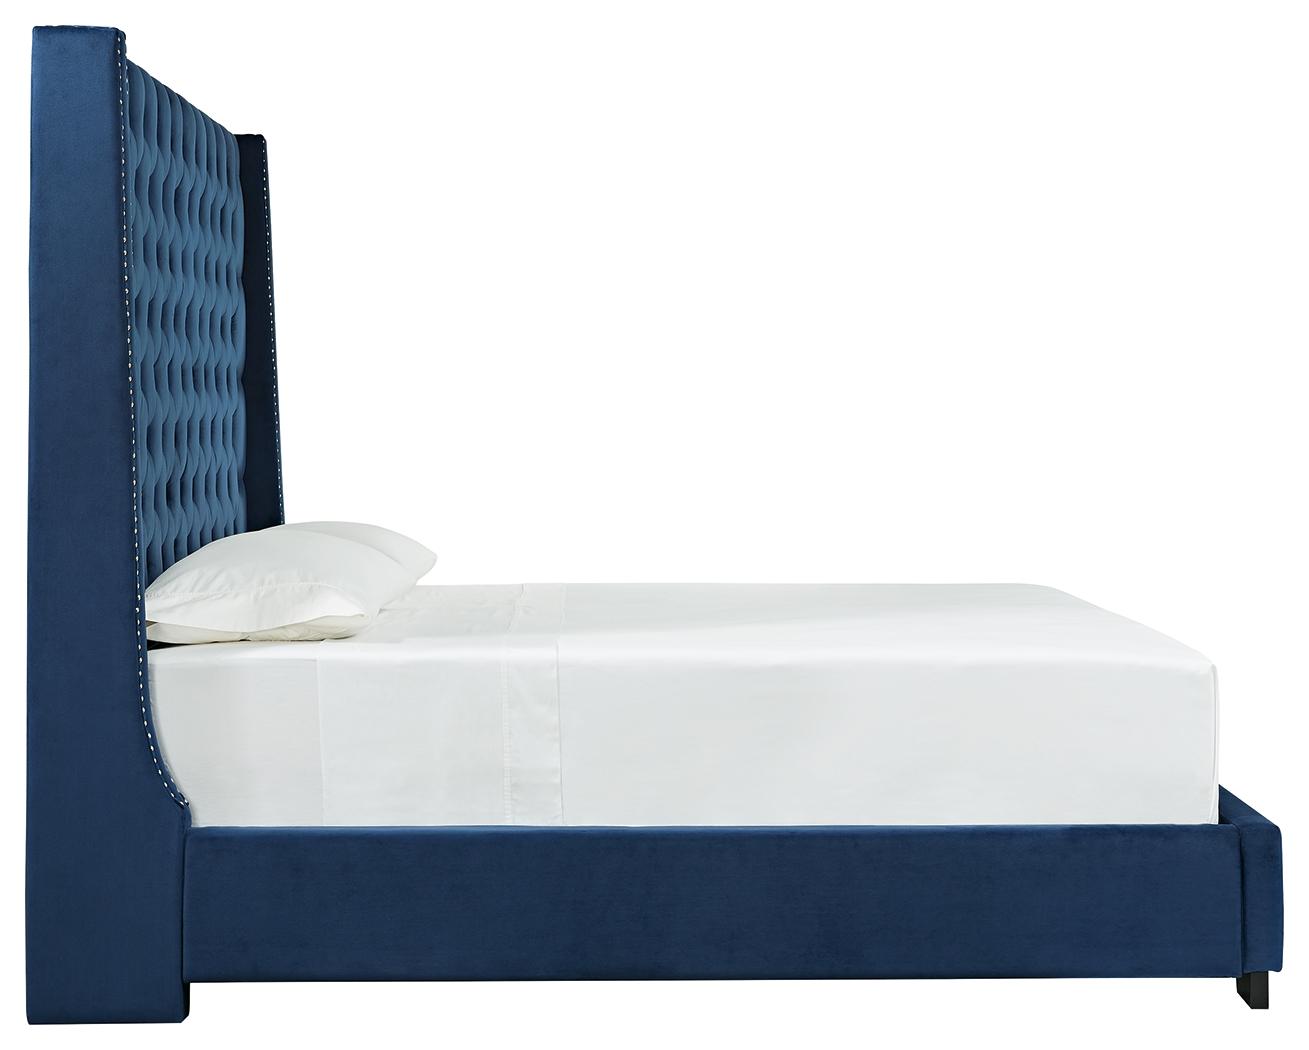 ASHLEY FURNITURE B650B25 Coralayne King Upholstered Bed